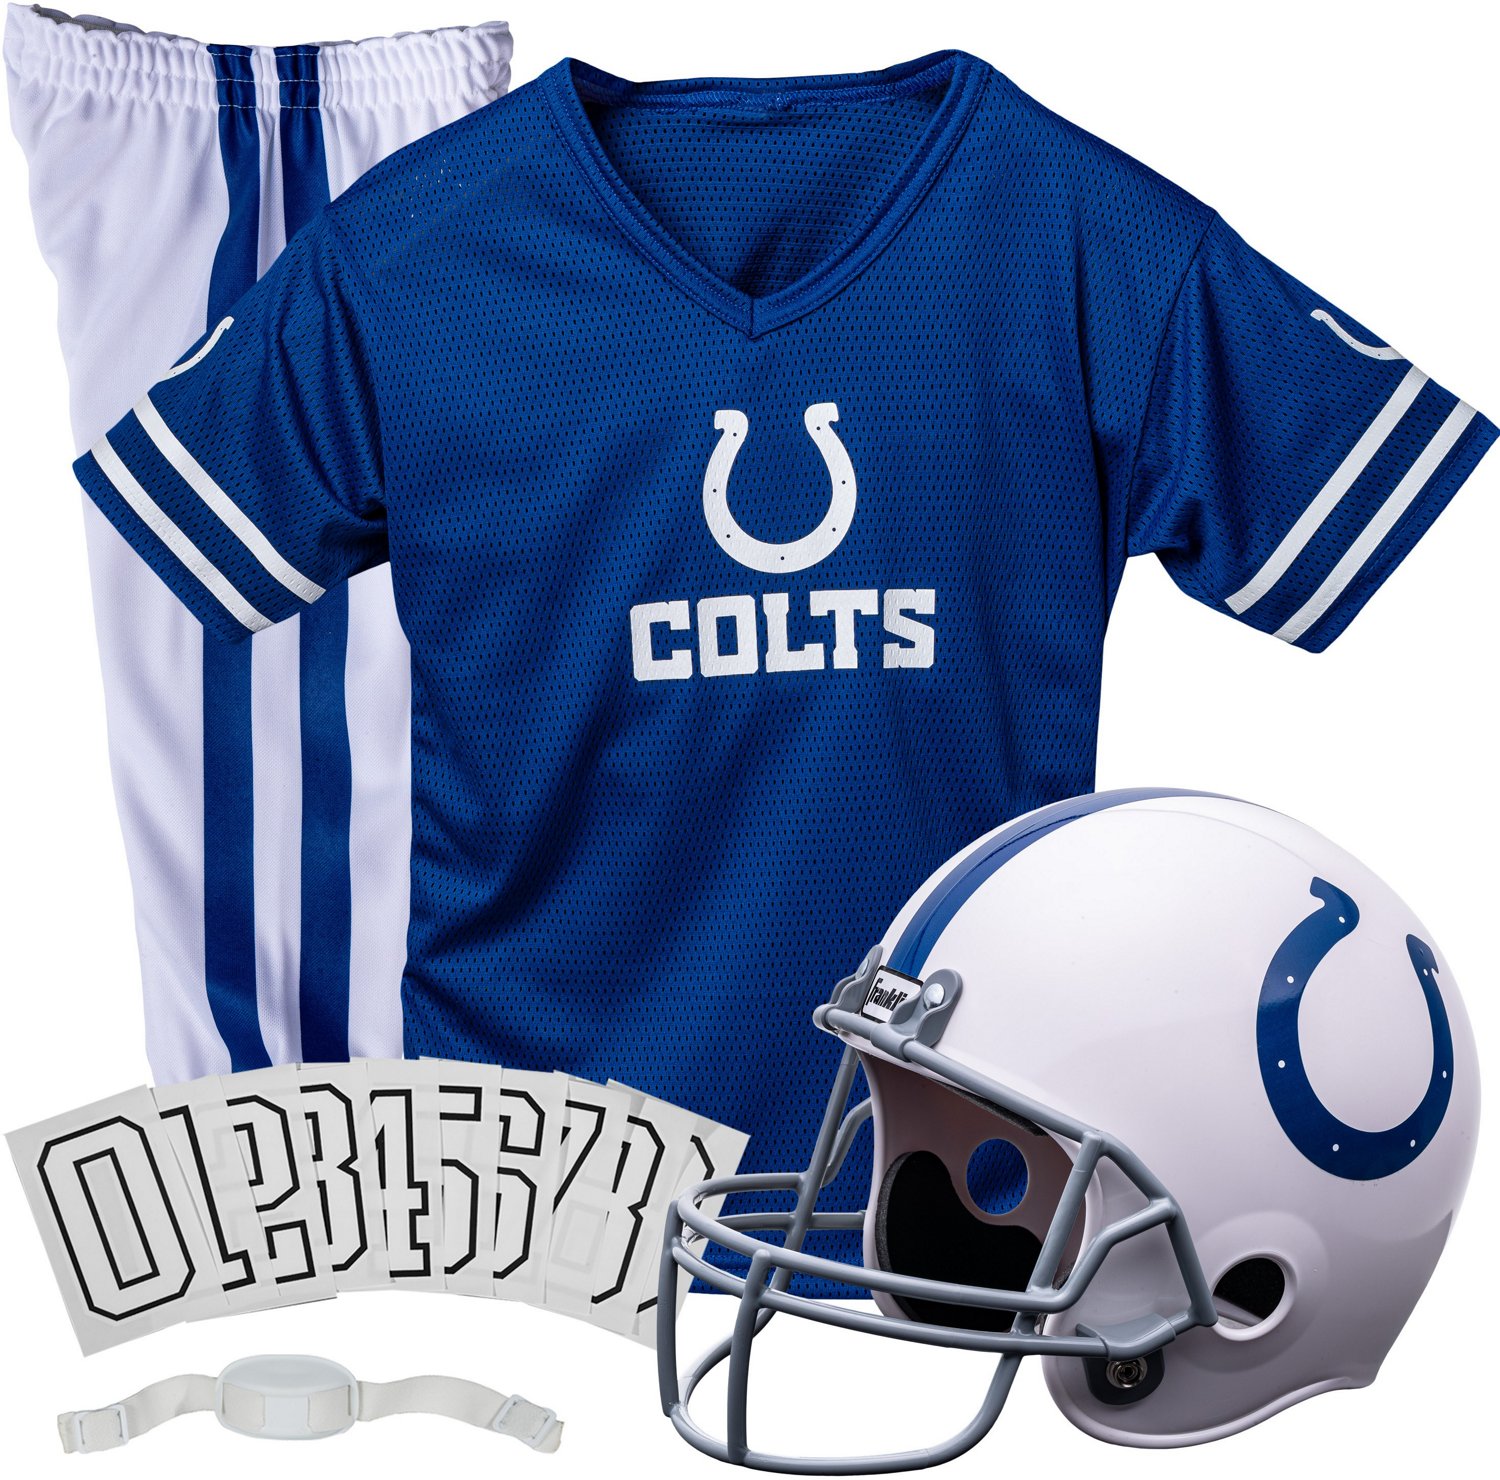 Franklin Kids' Indianapolis Colts Deluxe Uniform Set Academy